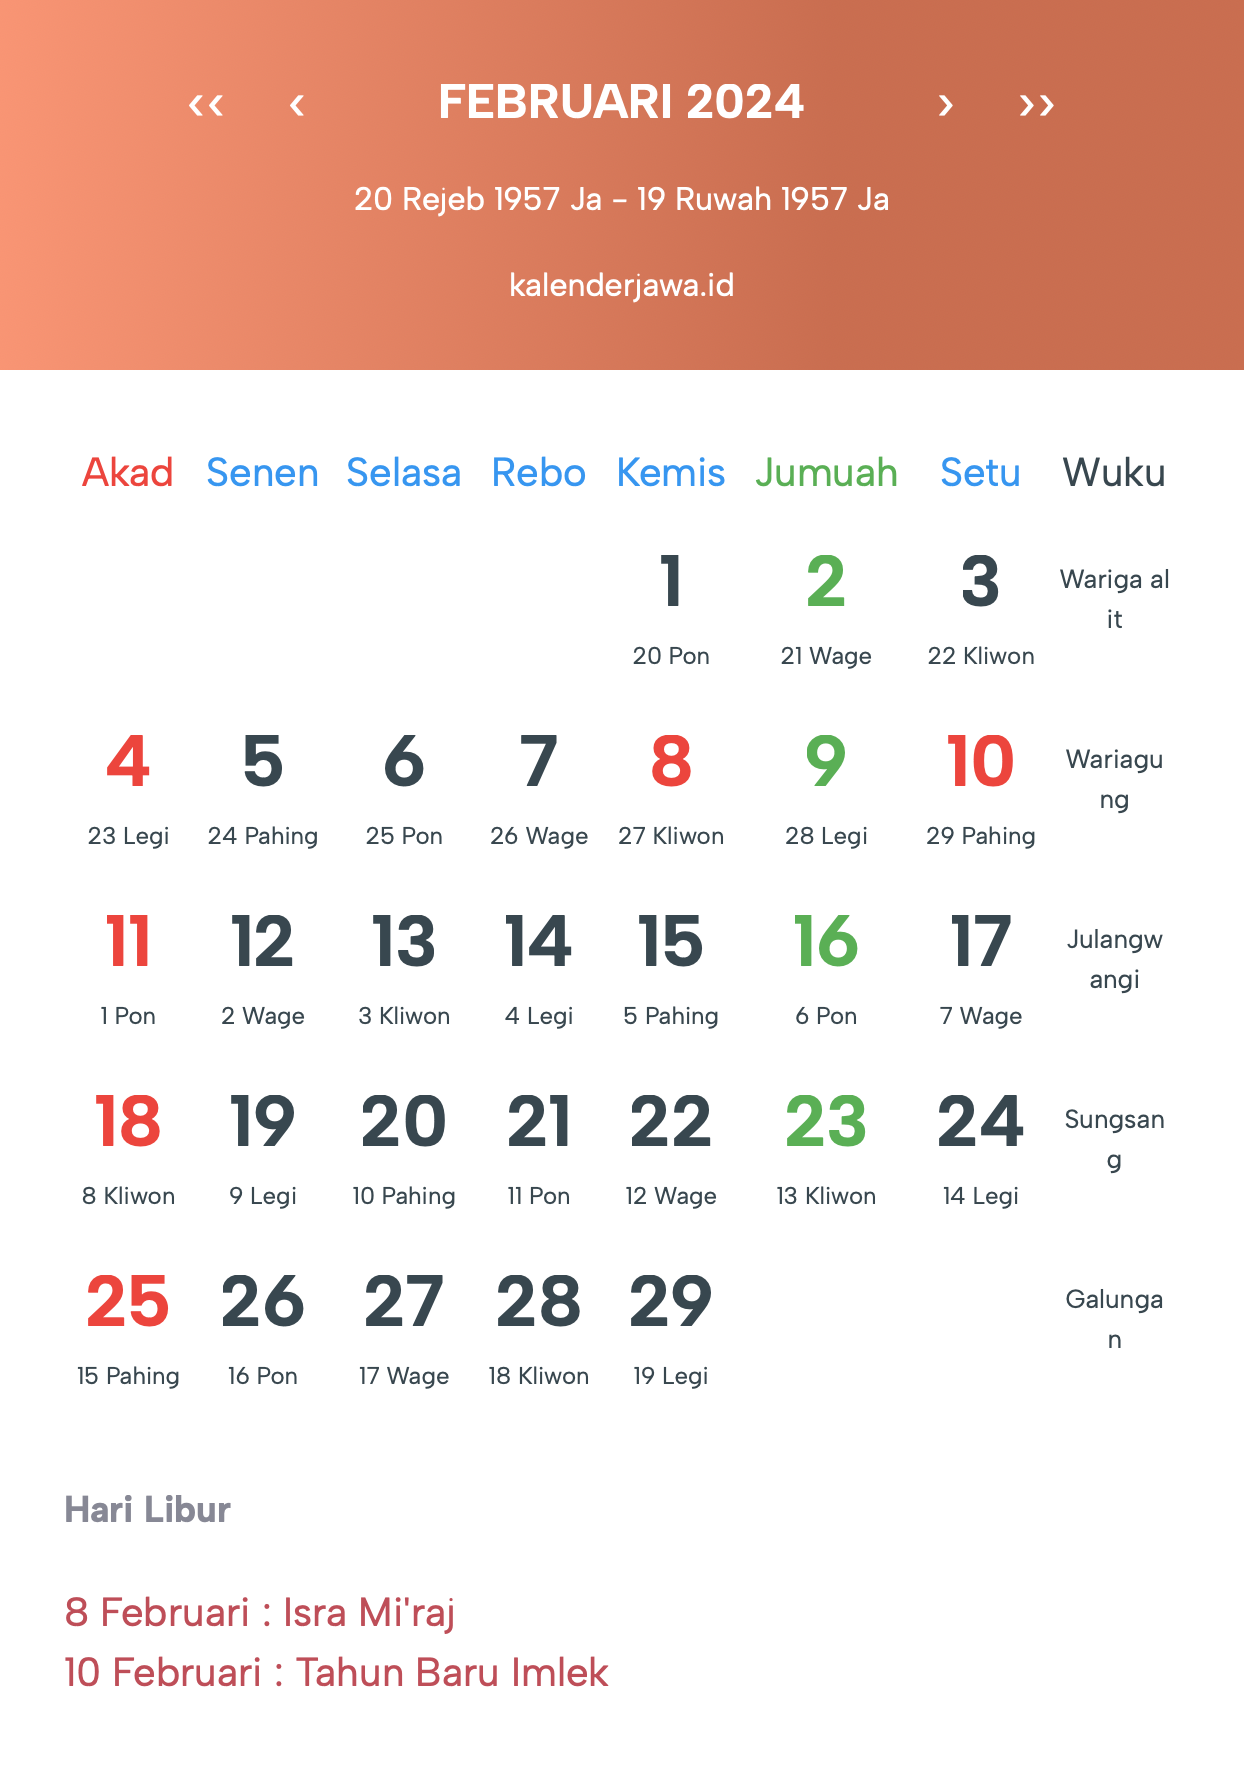 Gambar Kalender Jawa Februari 2024